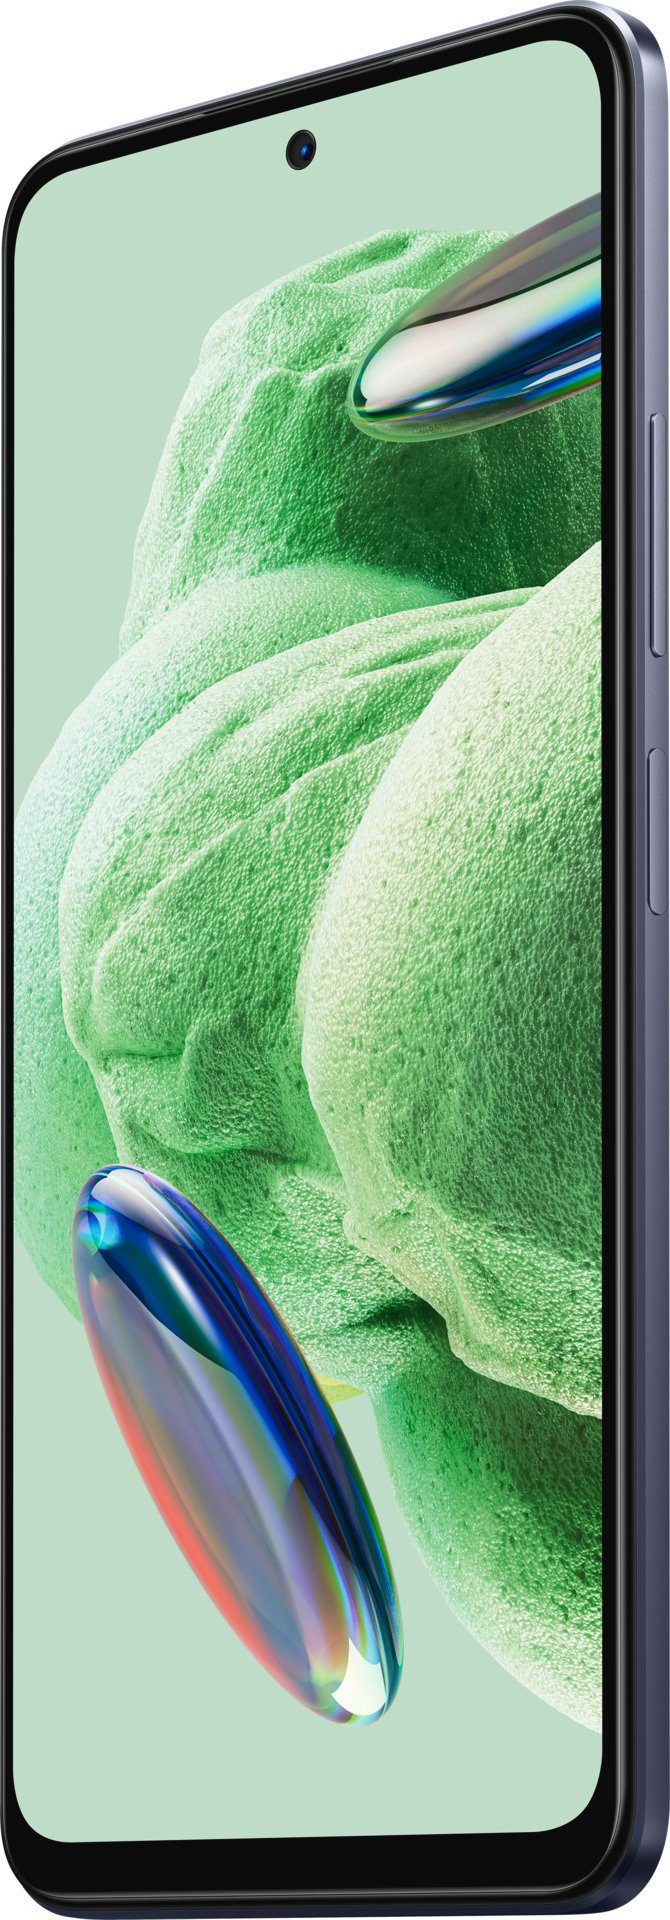 128 Smartphone 12 Redmi Zoll, Kamera) Speicherplatz, GB MP Xiaomi 5G (16,94 Note 48 4GB+128GB Dunkelgrau cm/6,67